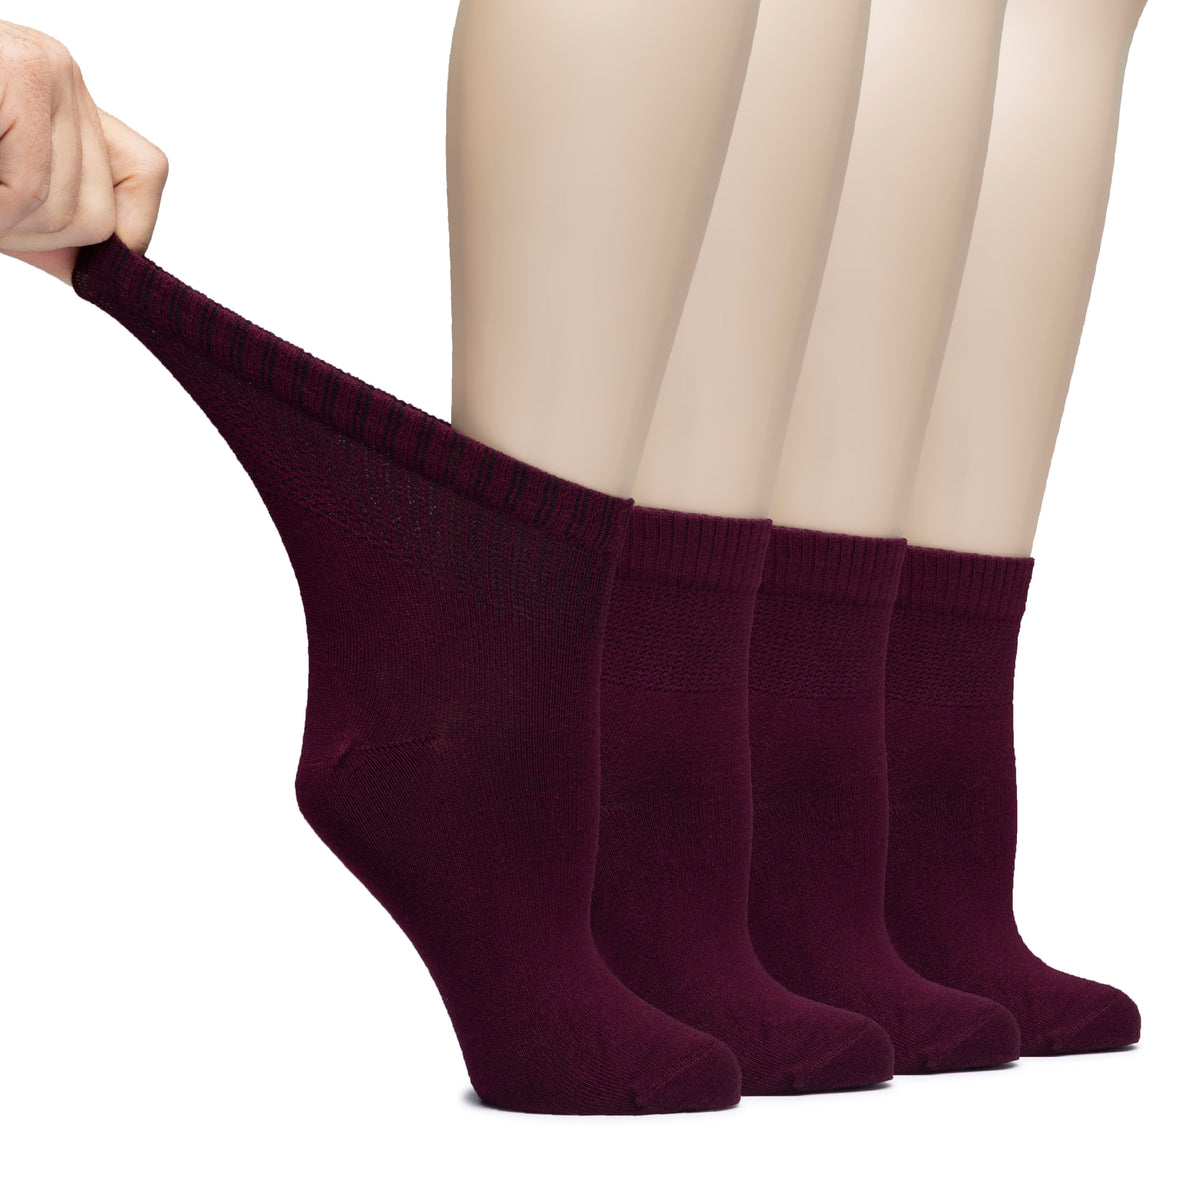 Hugh Ugoli Lightweight Women's Diabetic Ankle Socks Bamboo Thin Socks Seamless Toe and Non-Binding Top, 4 Pairs, , Shoe Size: 6-9/10-12 | Shoe Size: 10-12 | Burgundy